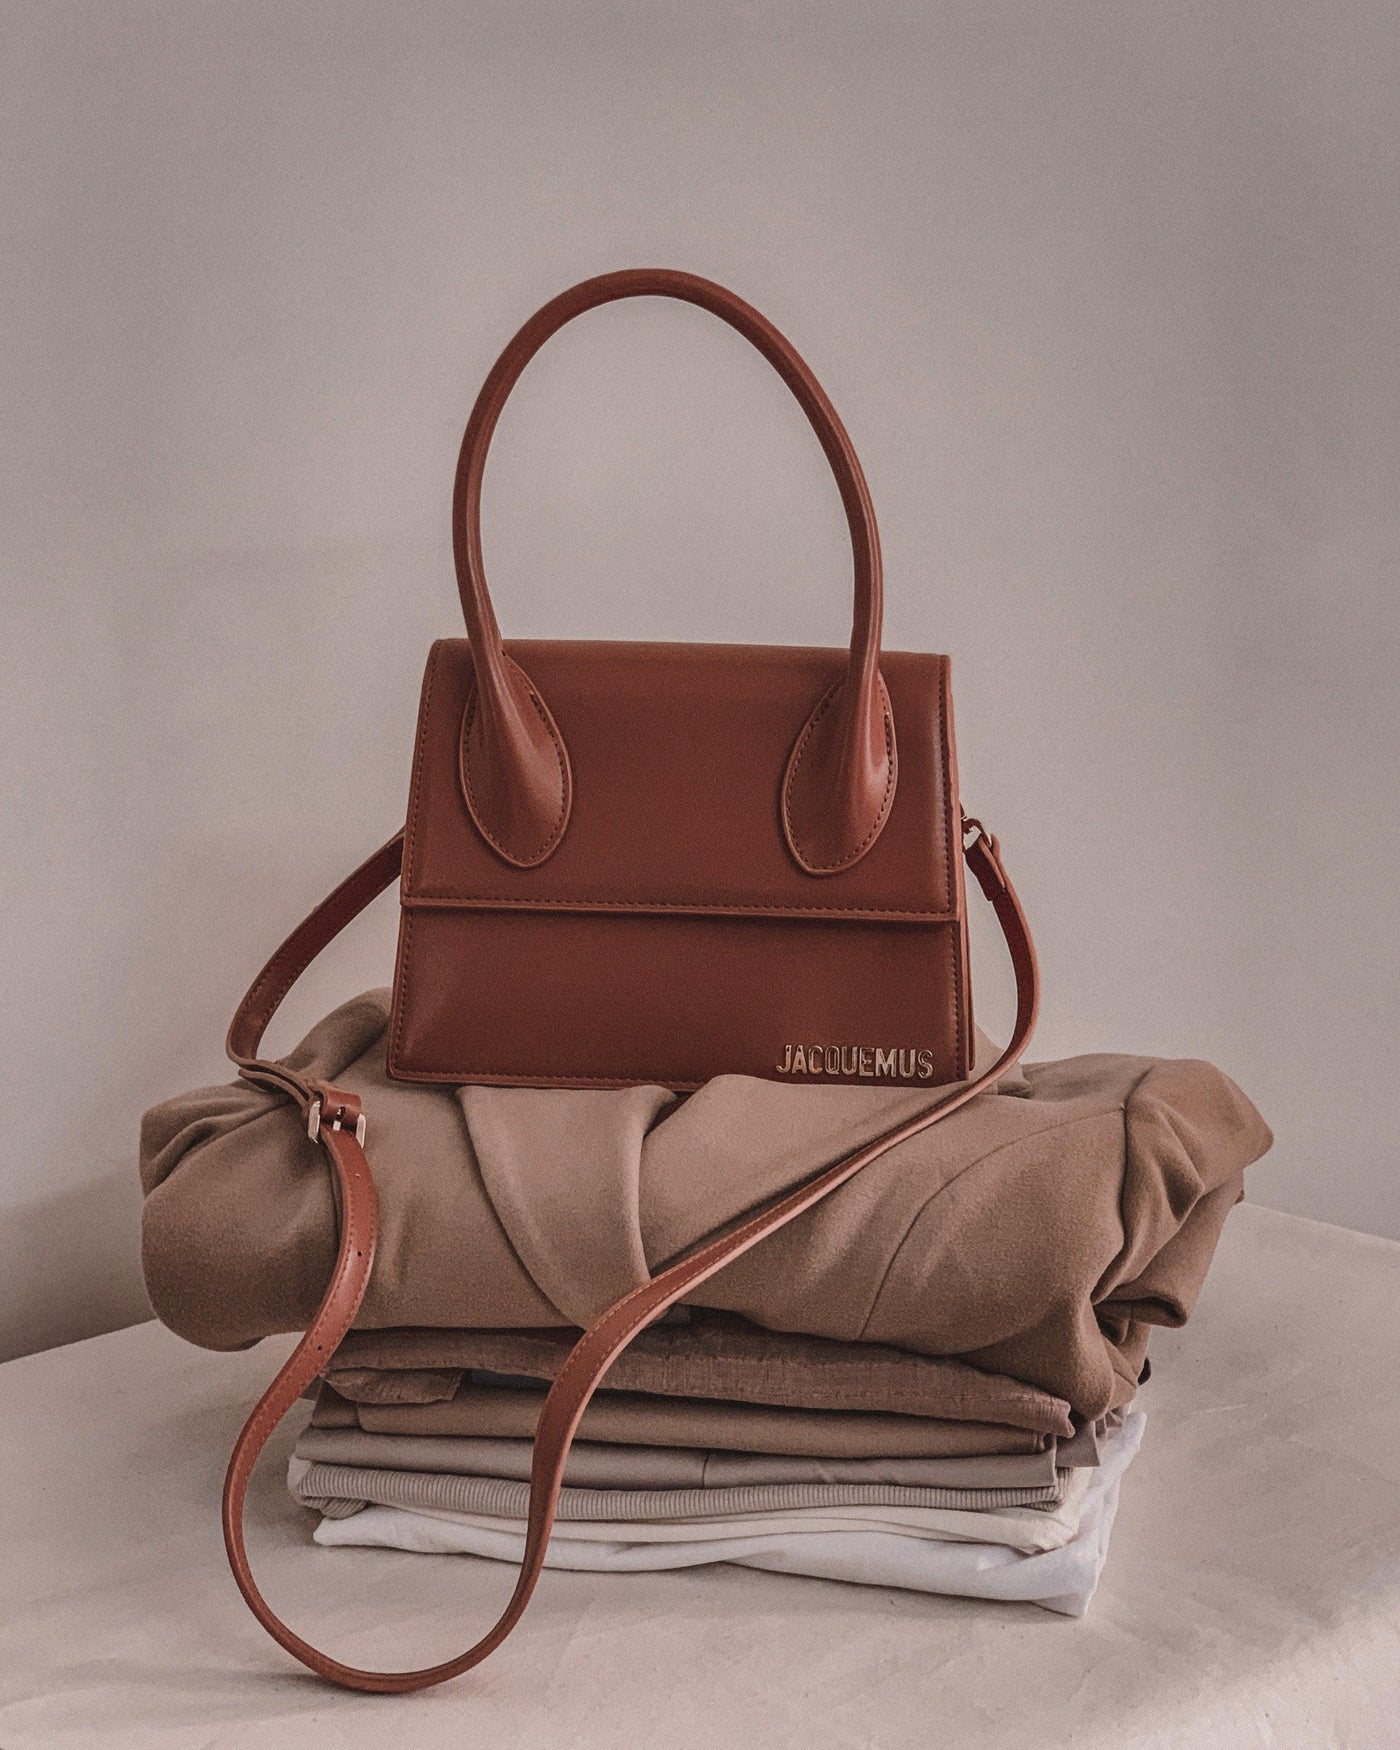 Handbags, Purses, & Wallets at Haute for the Culture